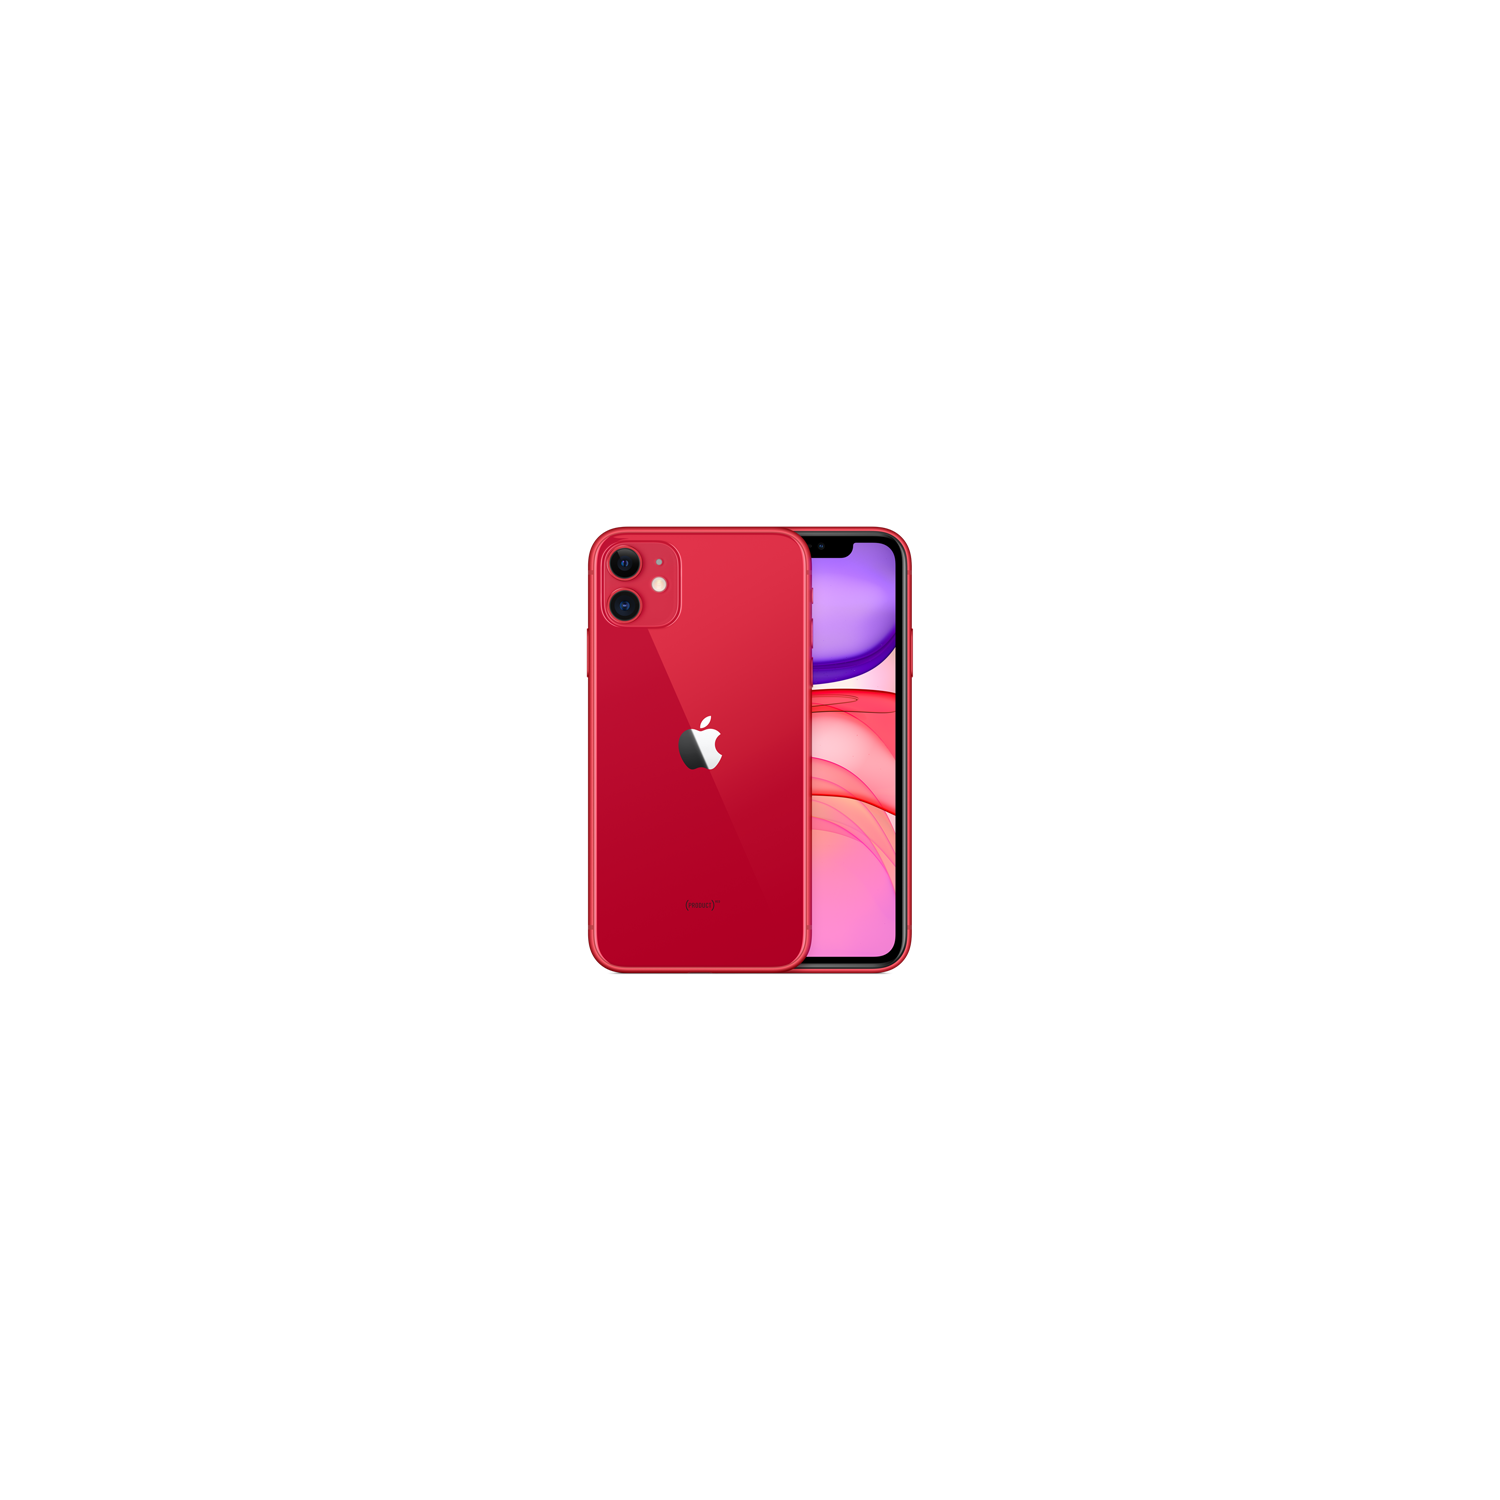 Refurbished (Good) - Apple iPhone 11 64GB Smartphone - (PRODUCT)RED - Unlocked